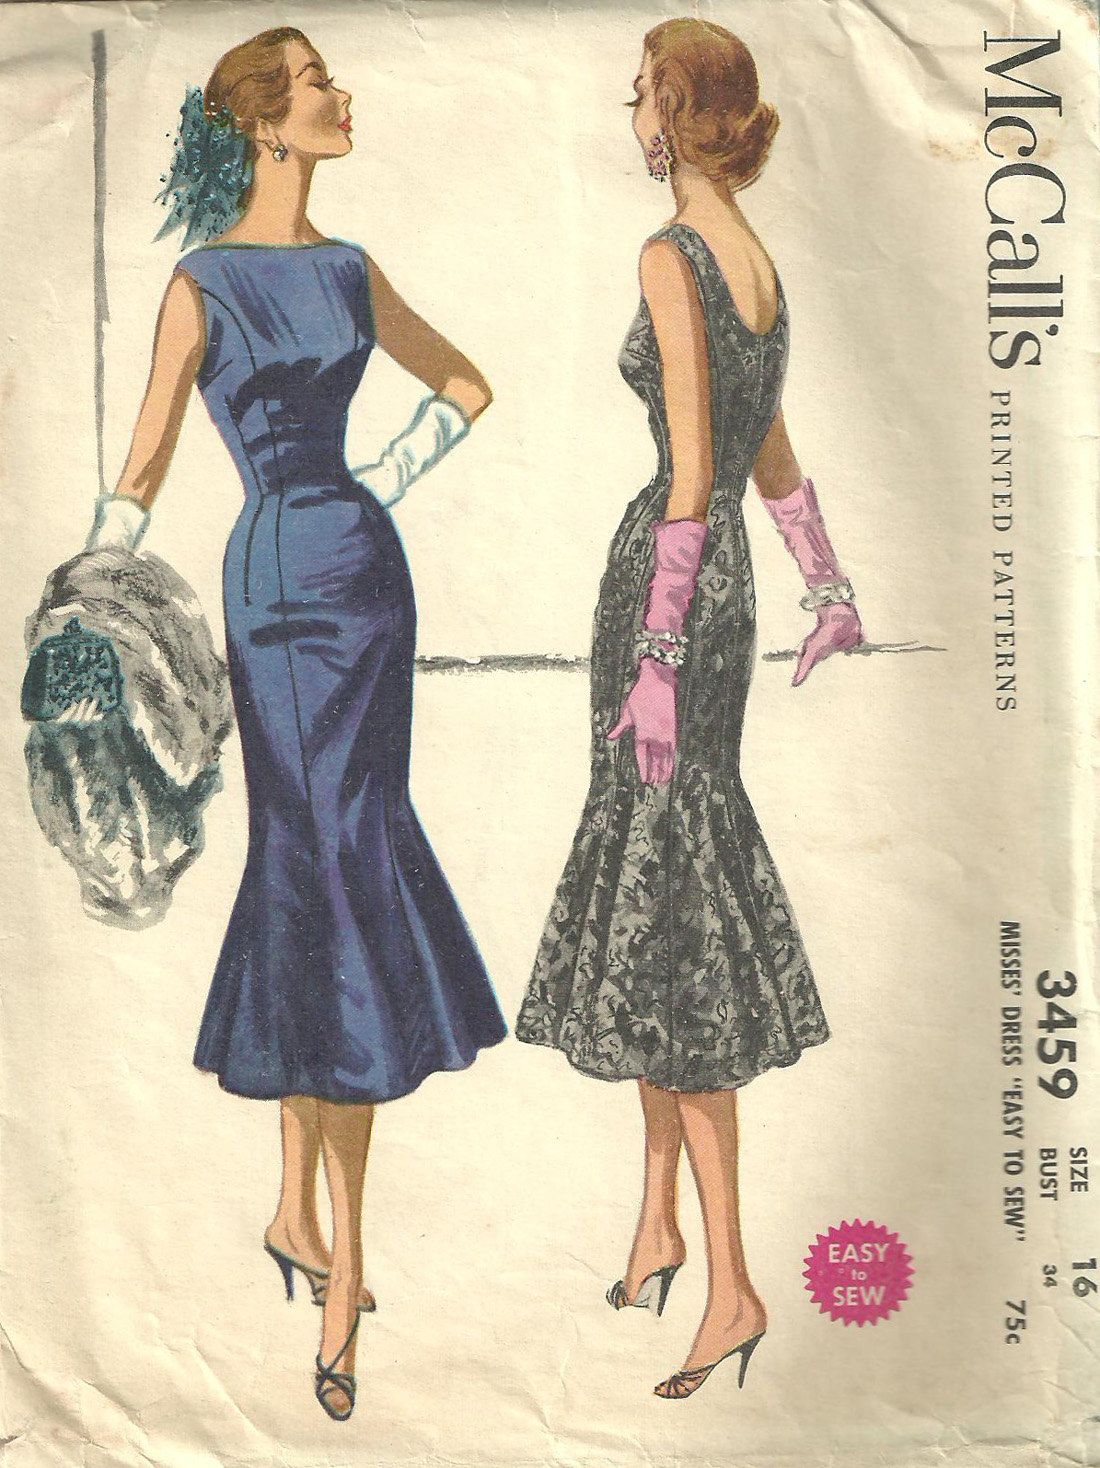 Vintage Sewing Patterns Mccalls 3459 Vintage 50s Sewing Pattern Dress Size 16 2250 Via